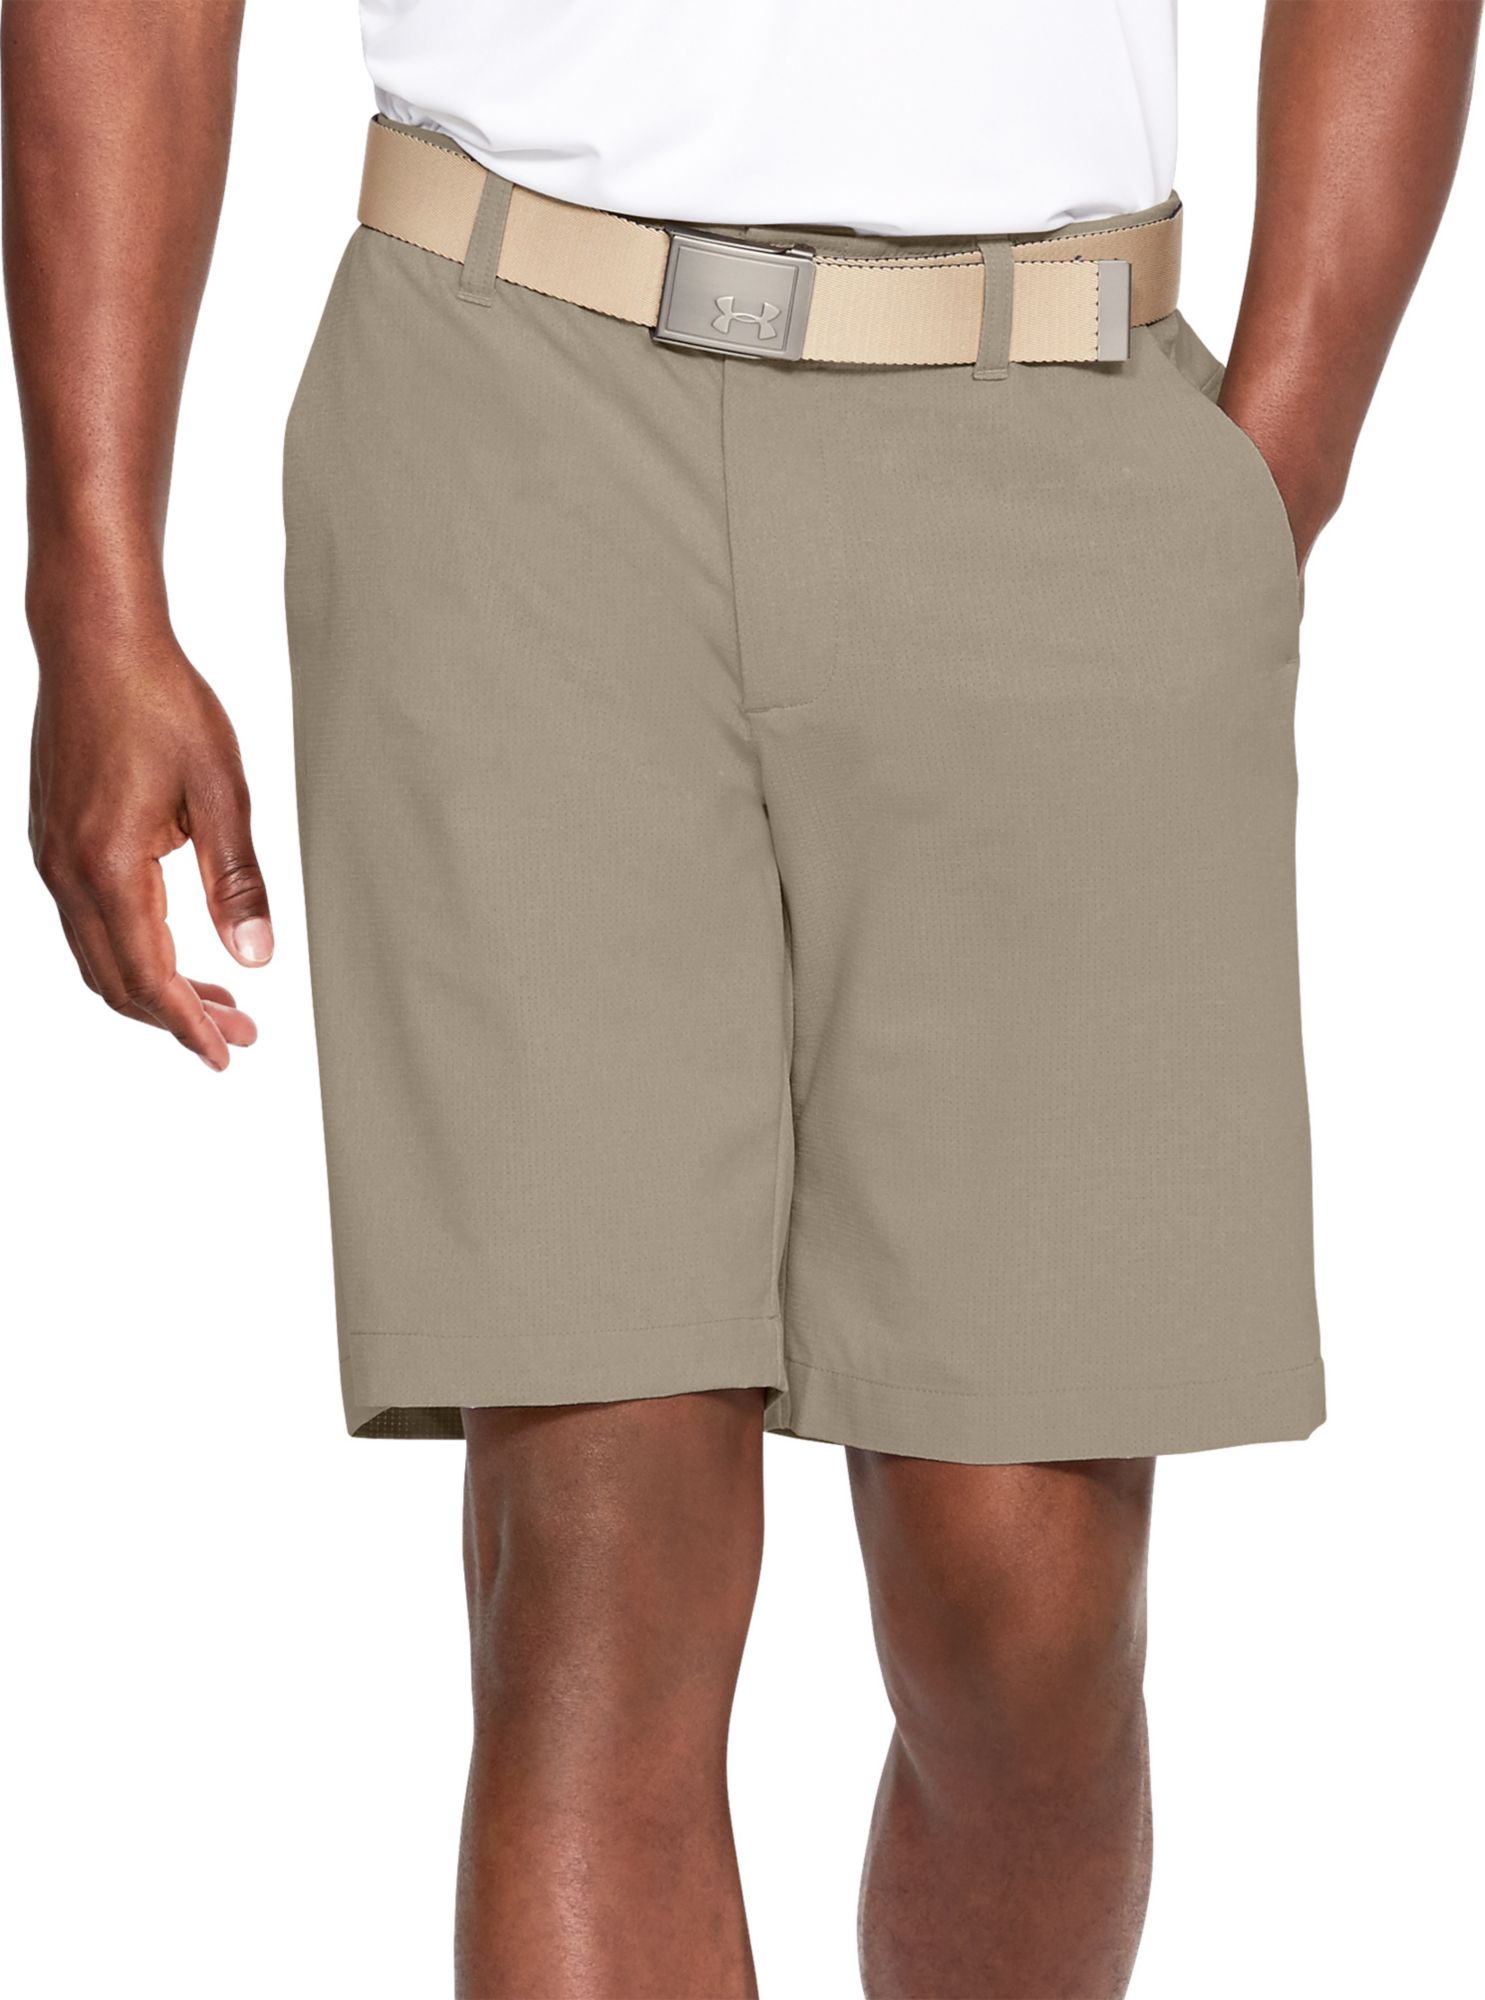 men's under armour khaki shorts